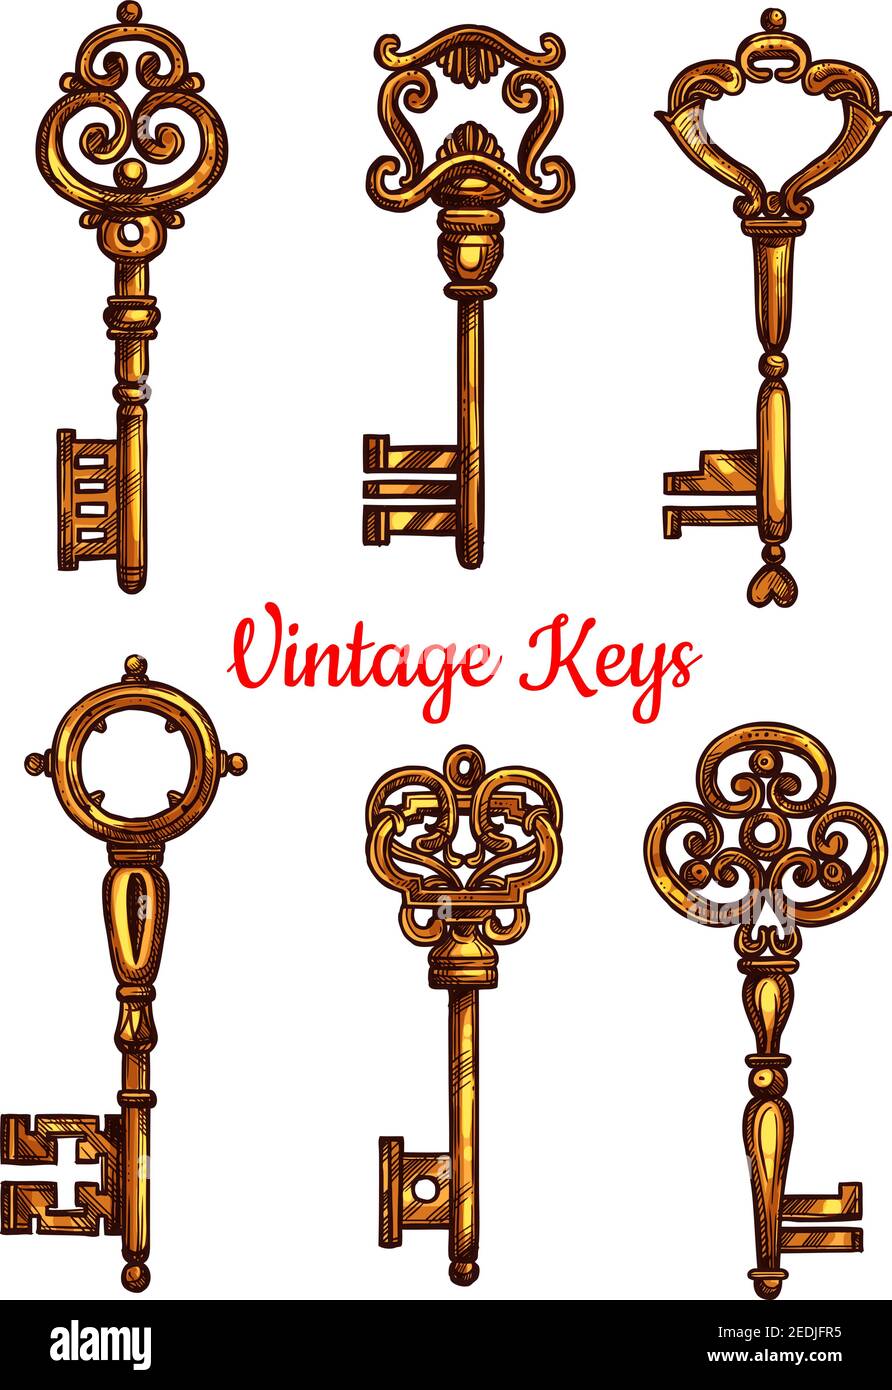 handmade work - vintage key  Key drawings, Key tattoo designs, Vintage keys